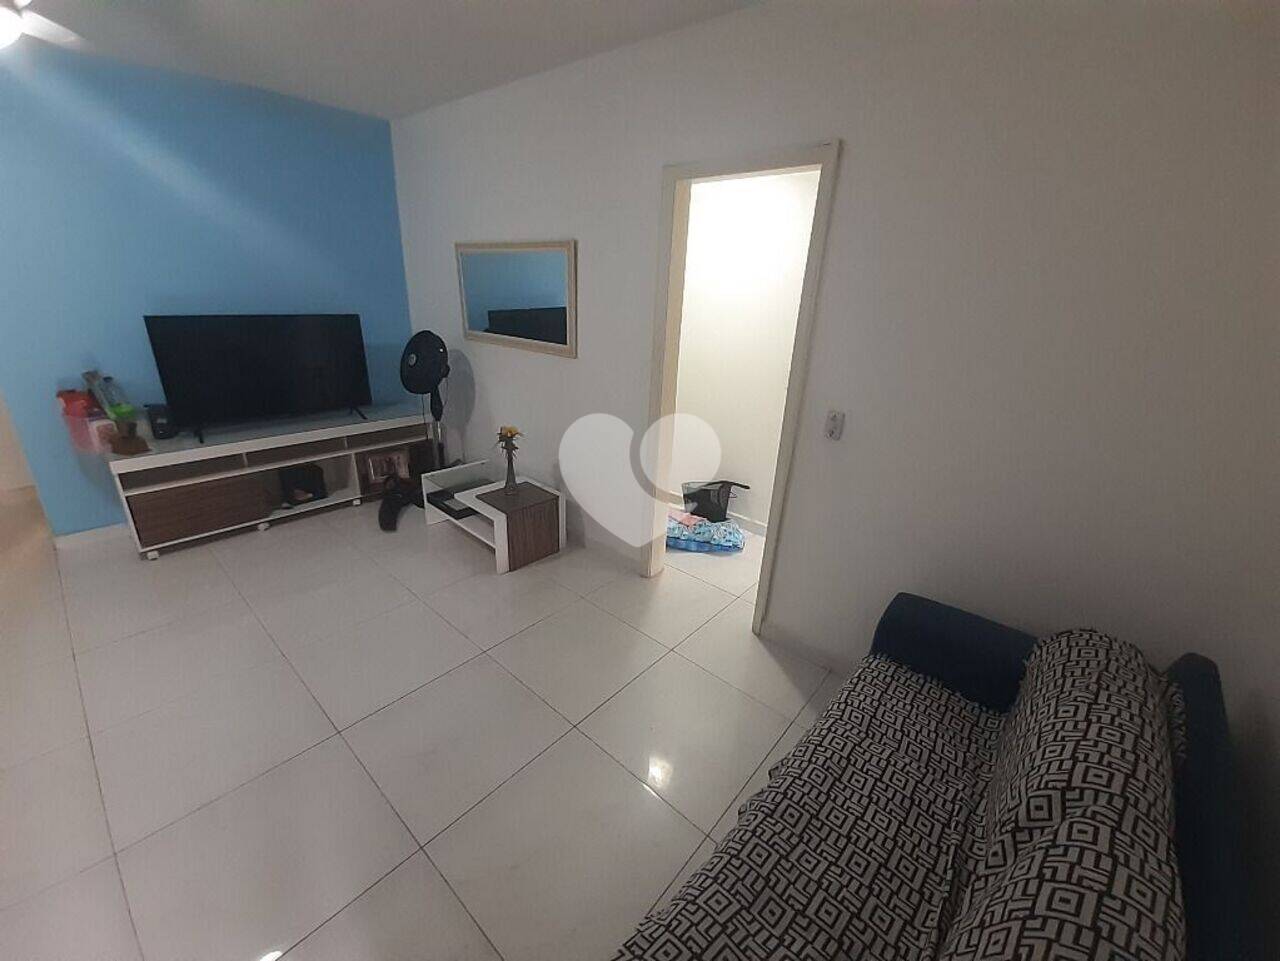 Apartamento Tijuca, Rio de Janeiro - RJ